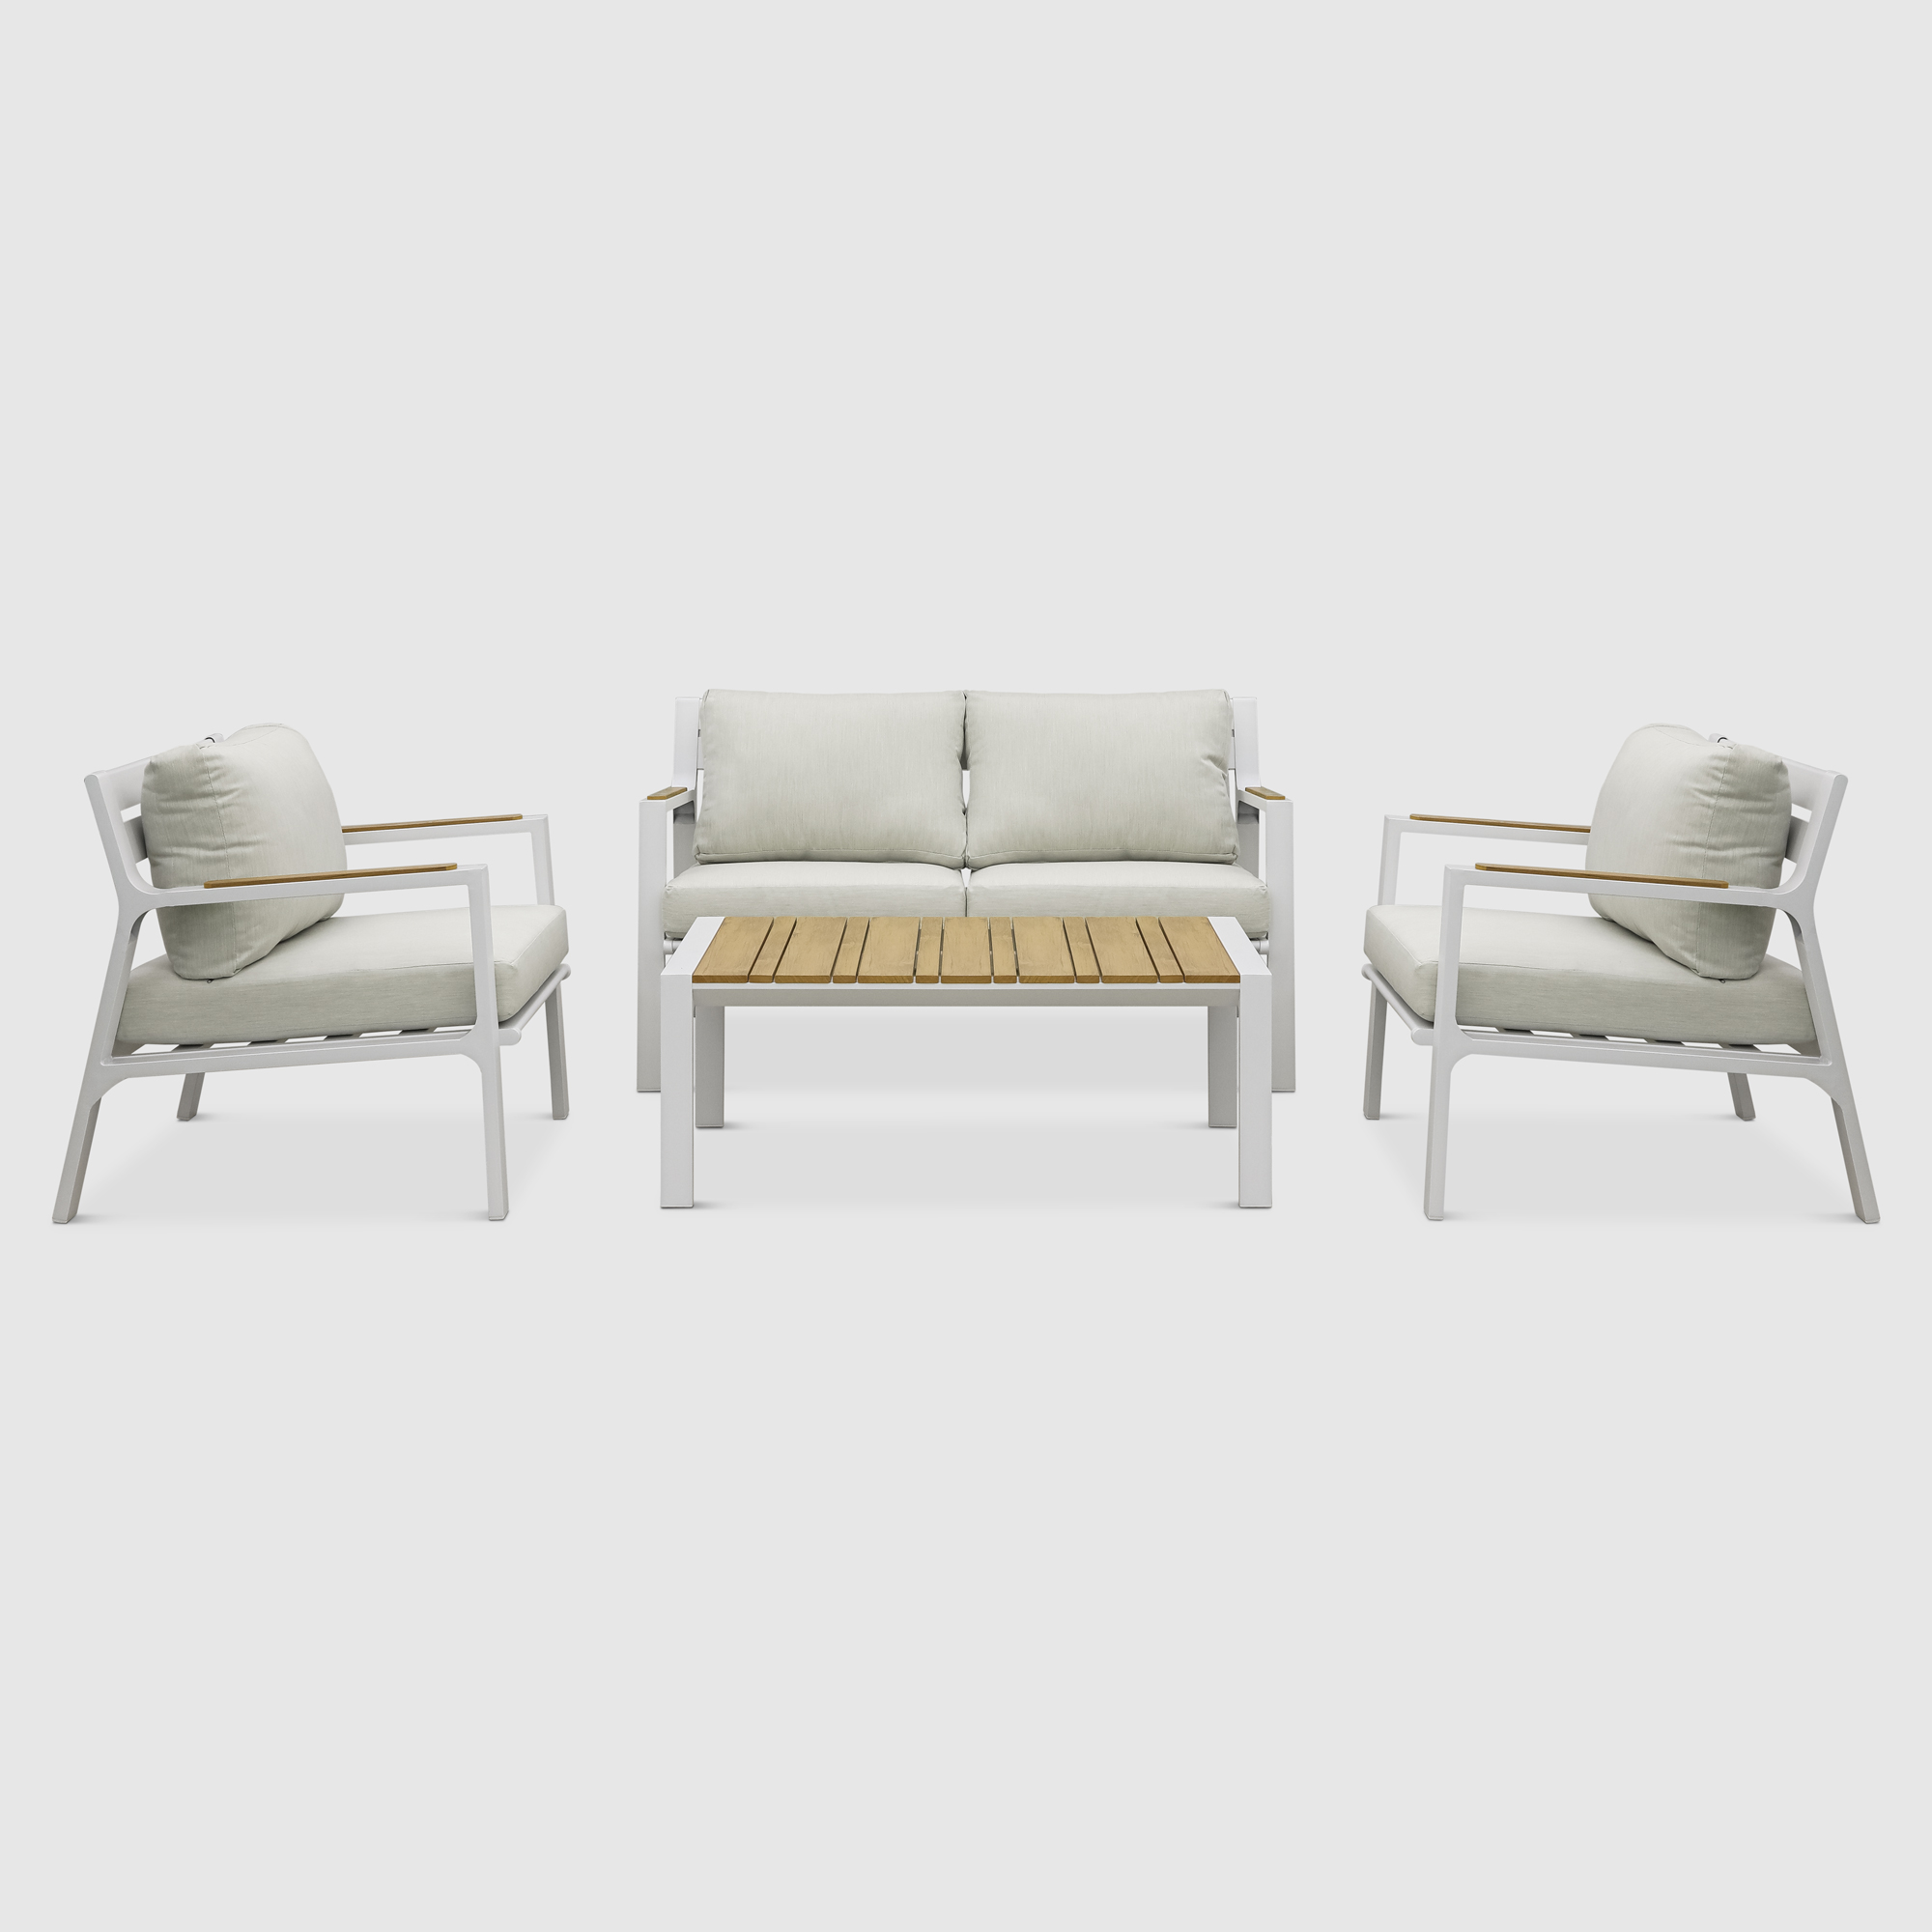 Комплект мебели Bizzotto Ernst белый с подушками 4 предмета комплект мебели bizzotto ernst 4 предмета